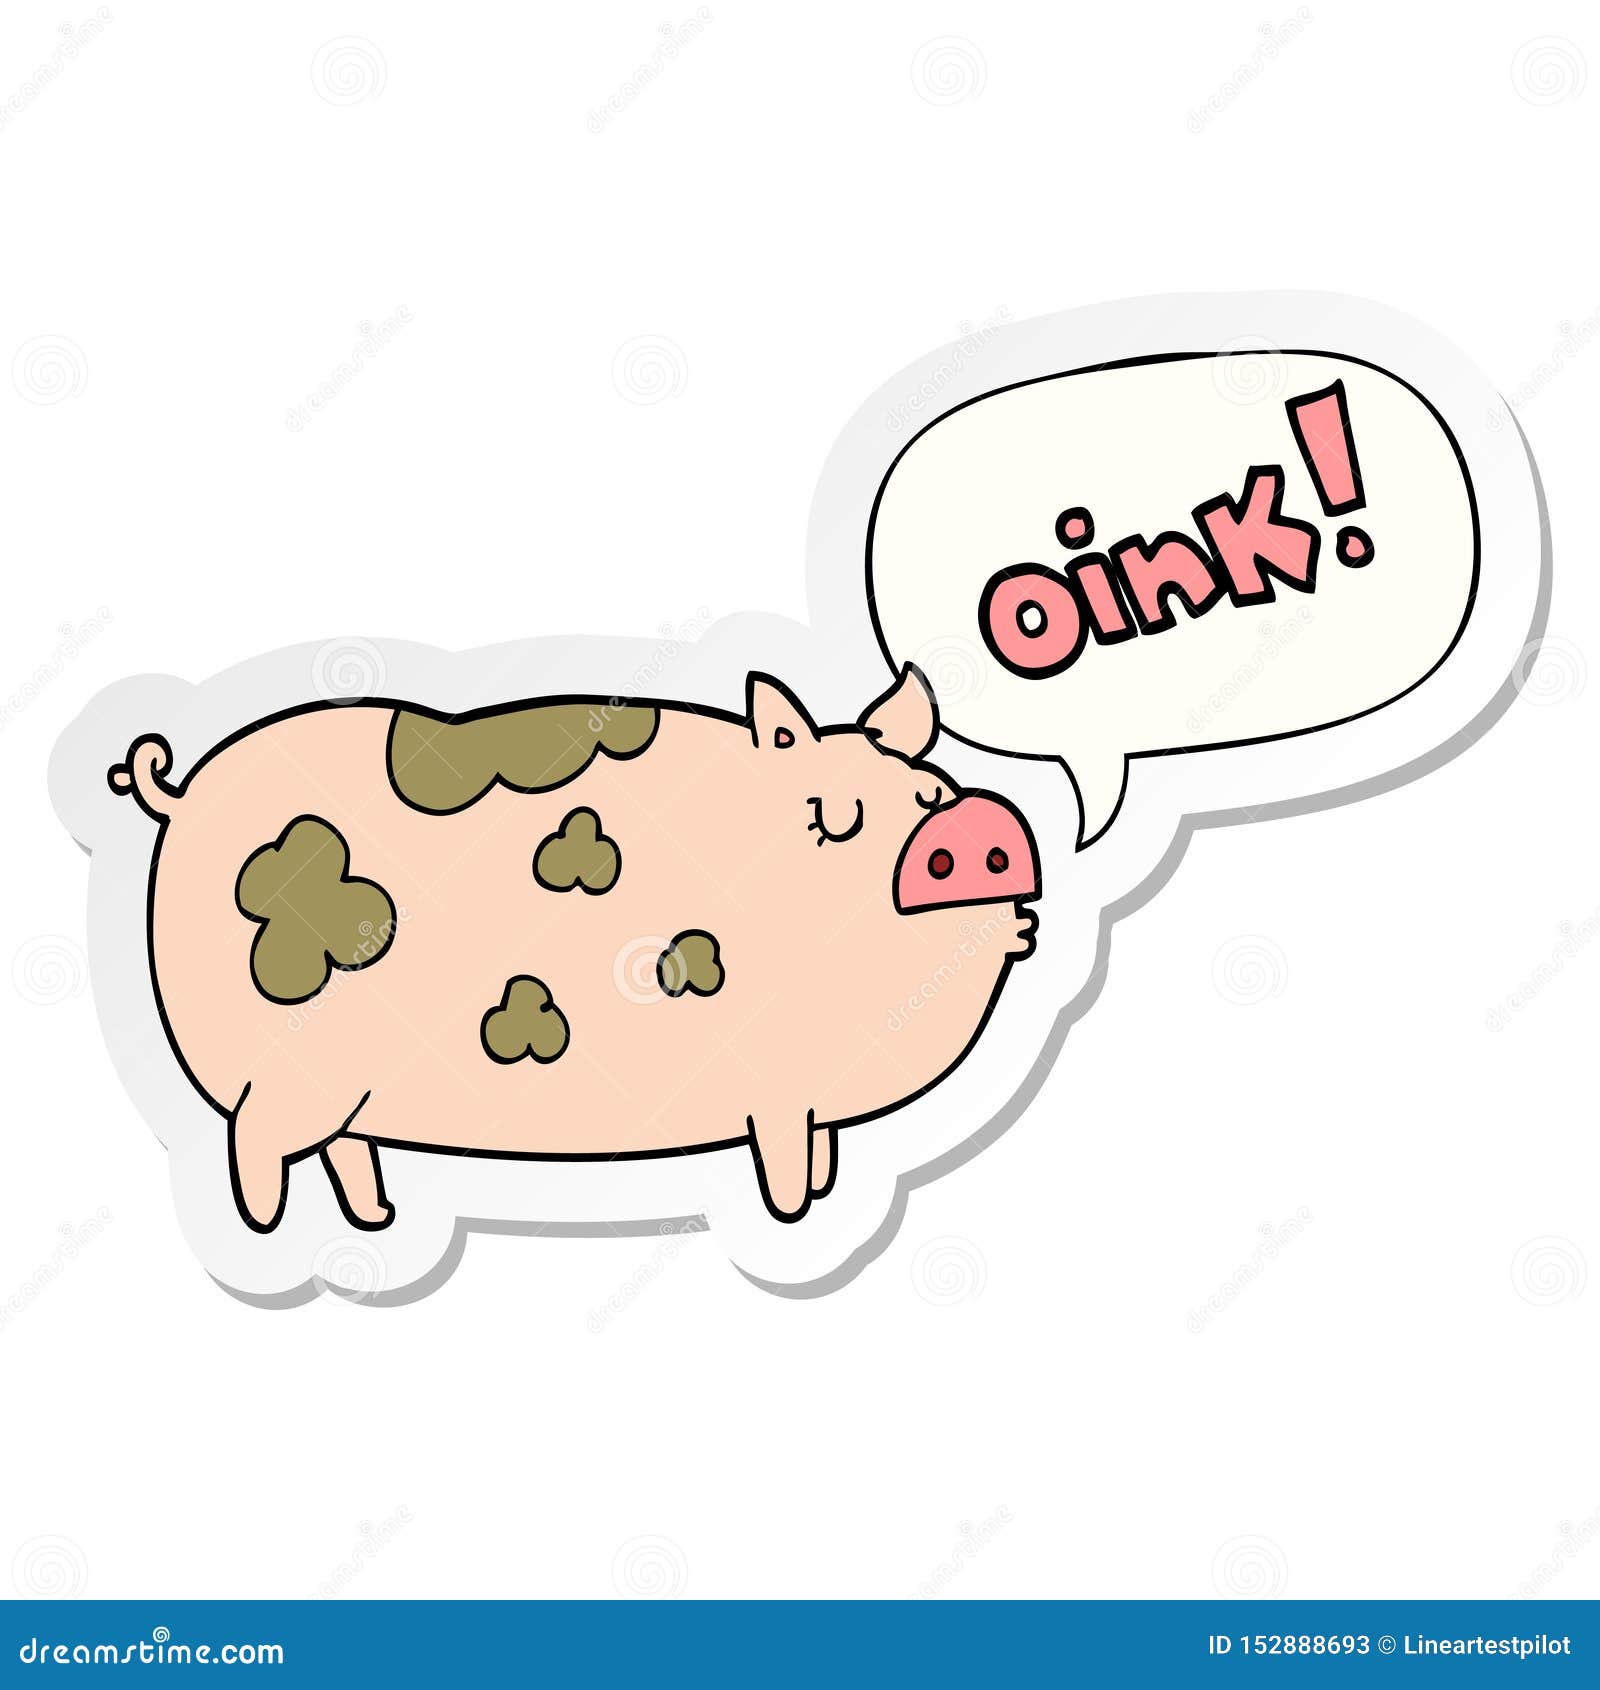 Pig Animals Oink Farm Cute Cartoon Sticker Label Stick Stock Illustrations  – 4 Pig Animals Oink Farm Cute Cartoon Sticker Label Stick Stock  Illustrations, Vectors  Clipart - Dreamstime